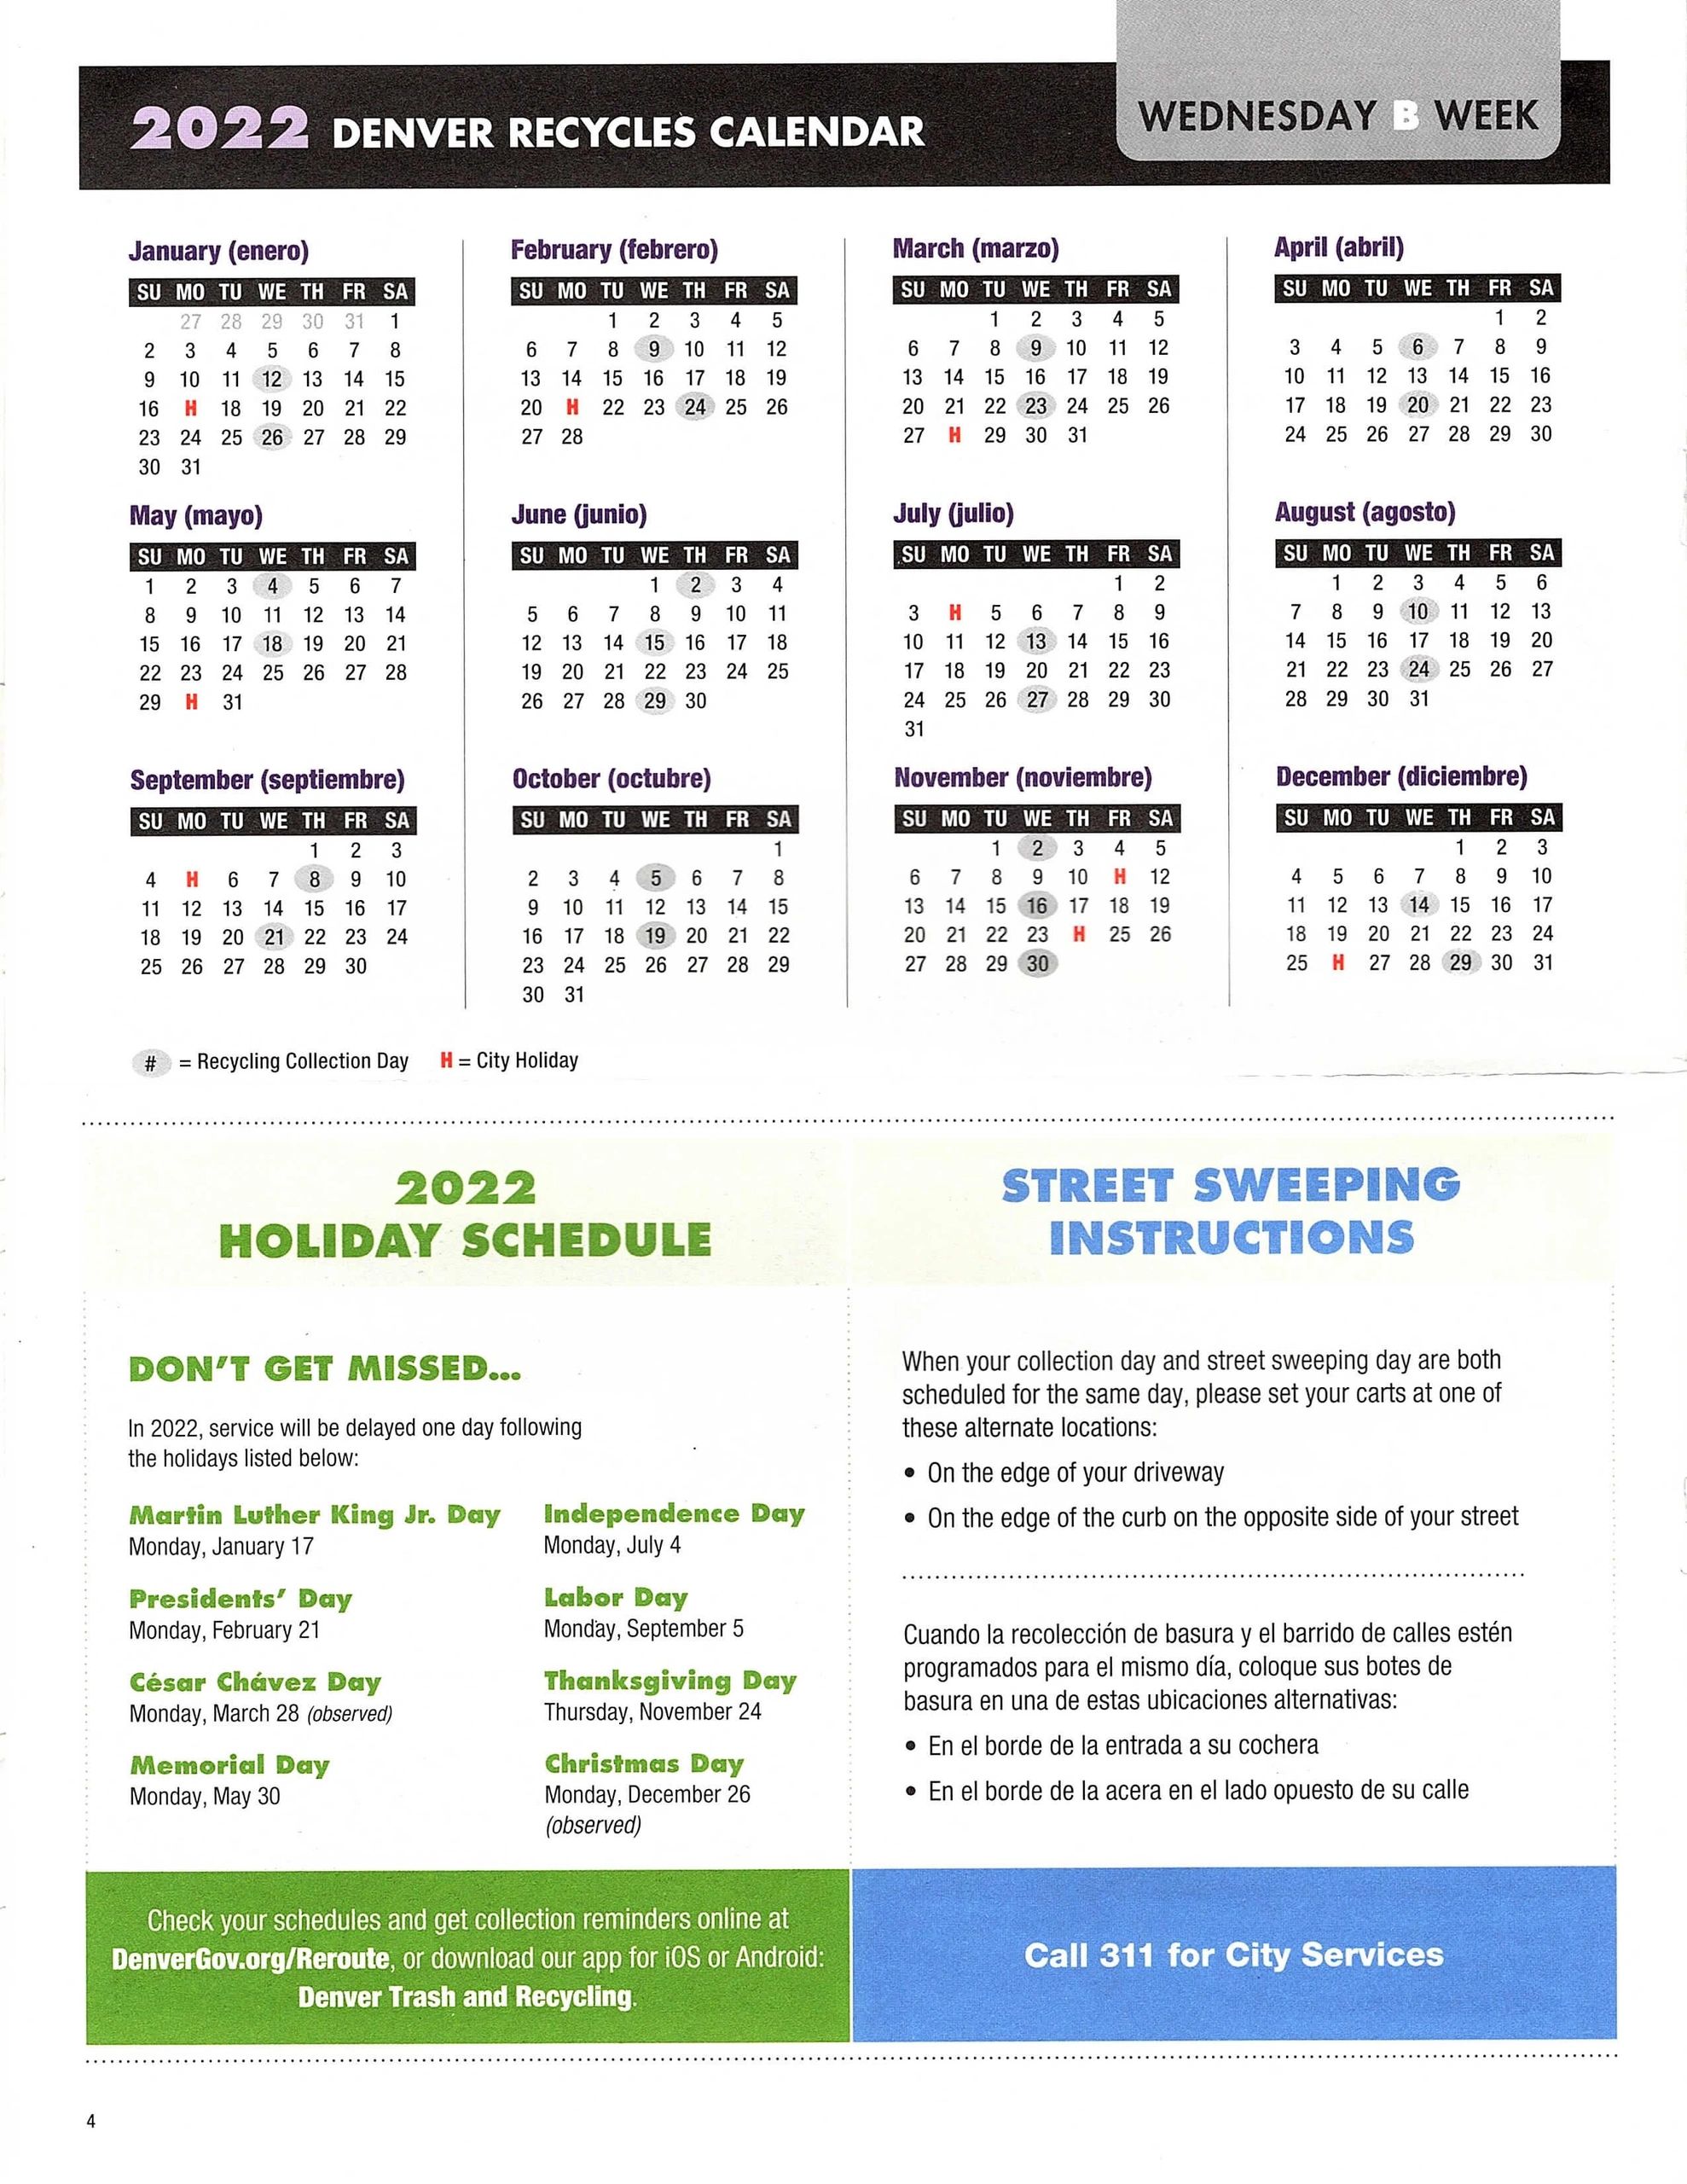 Telugu Calendar 2022 Denver - Customize and Print